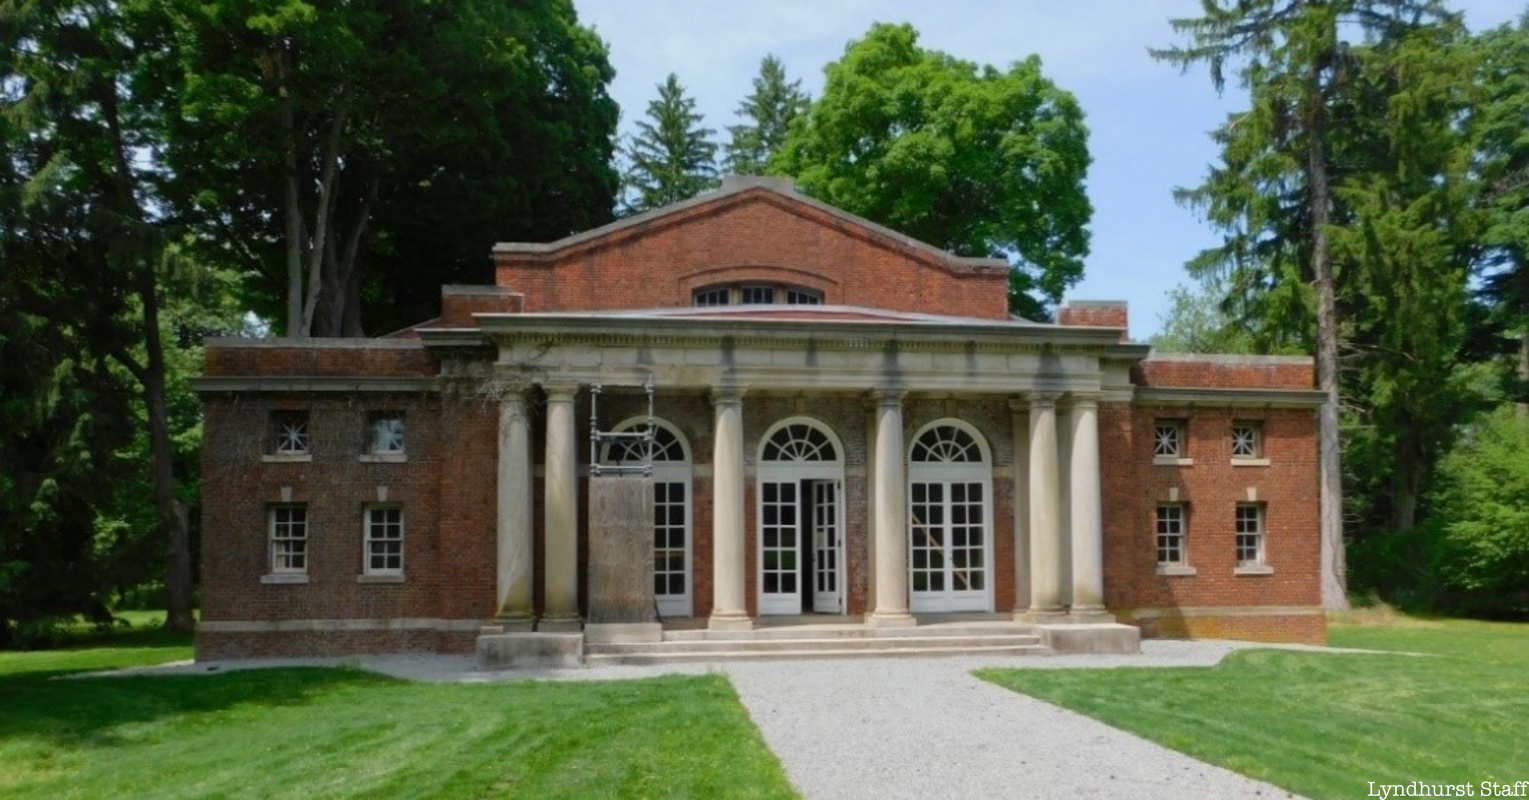 Pool house at Lyndhurst Mansion